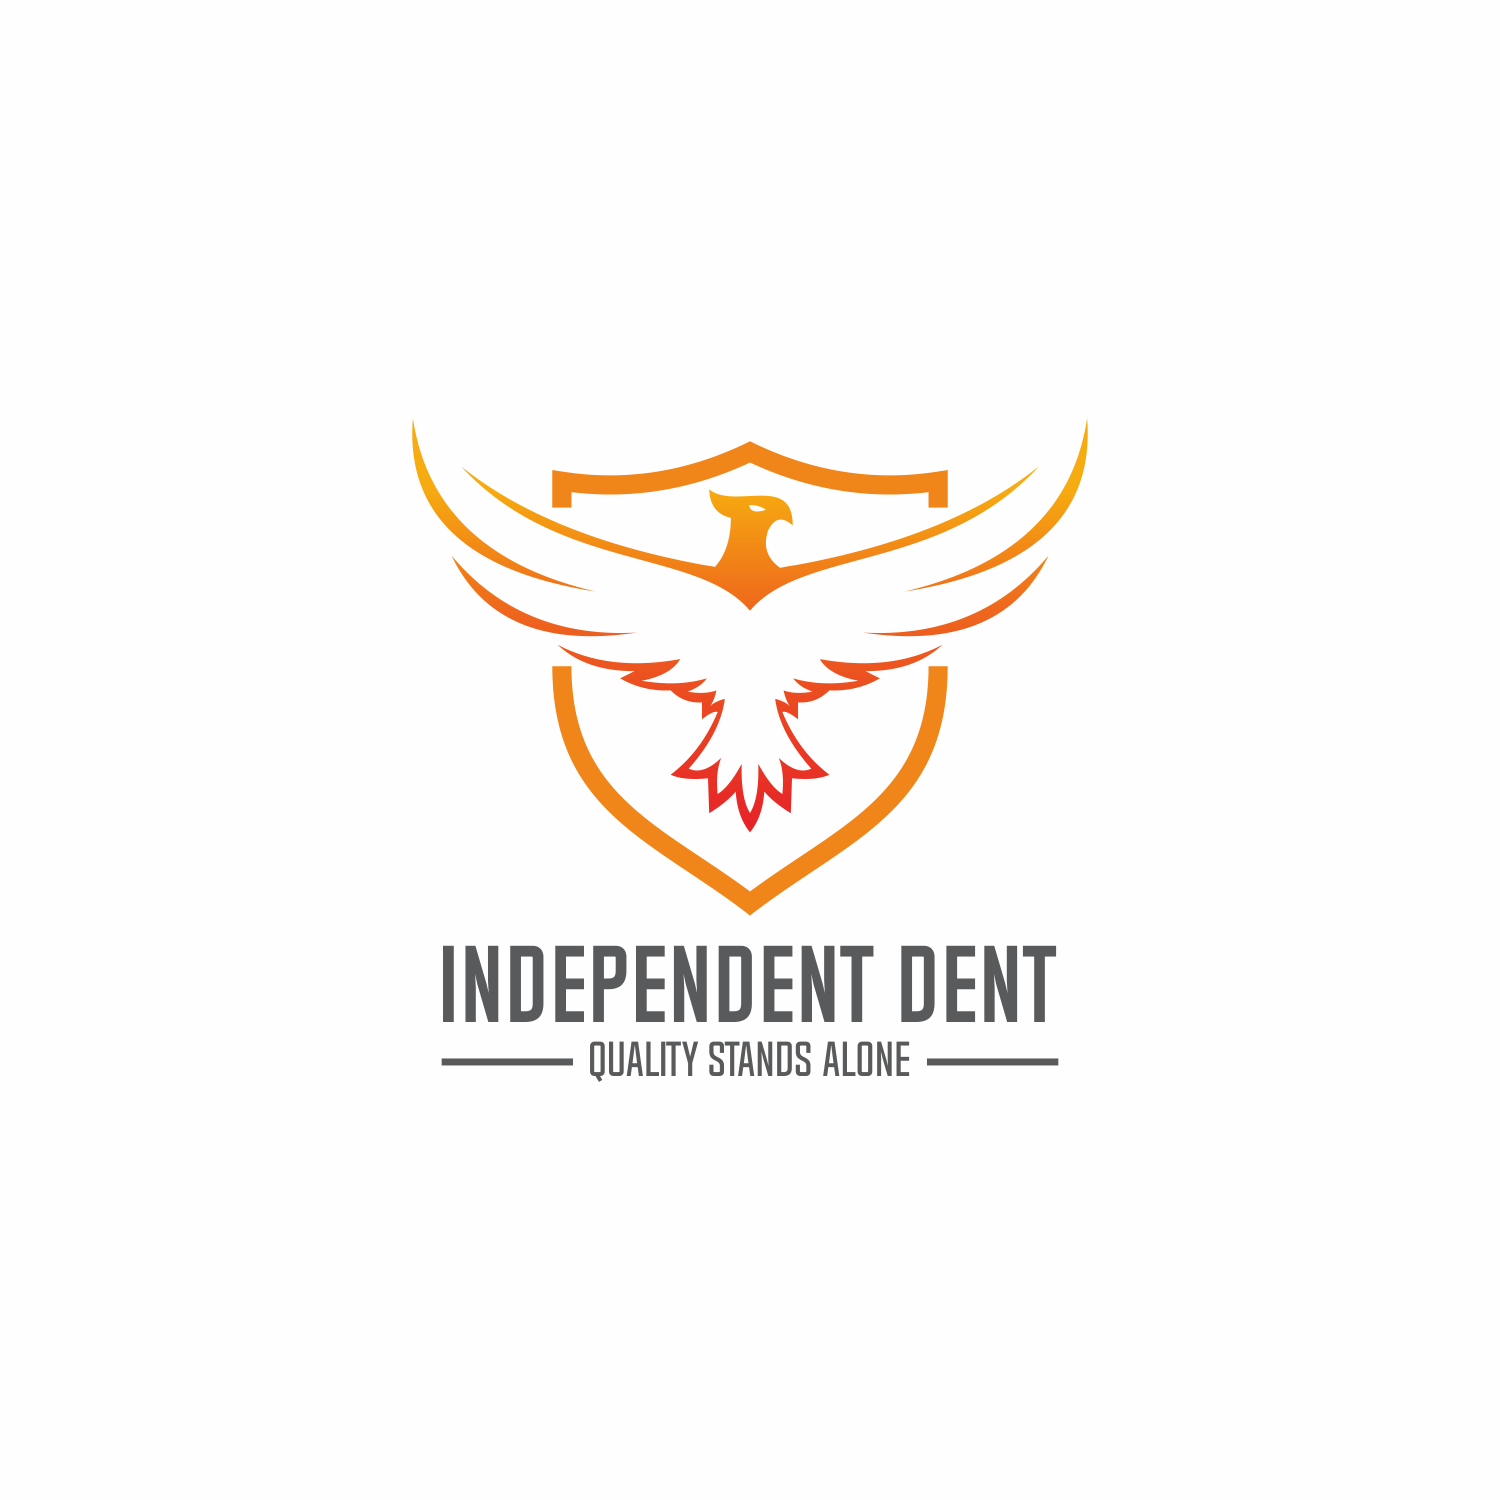 Birds Automotive Company Logo - Bold, Serious, Automotive Logo Design for Independent Dent Company ...